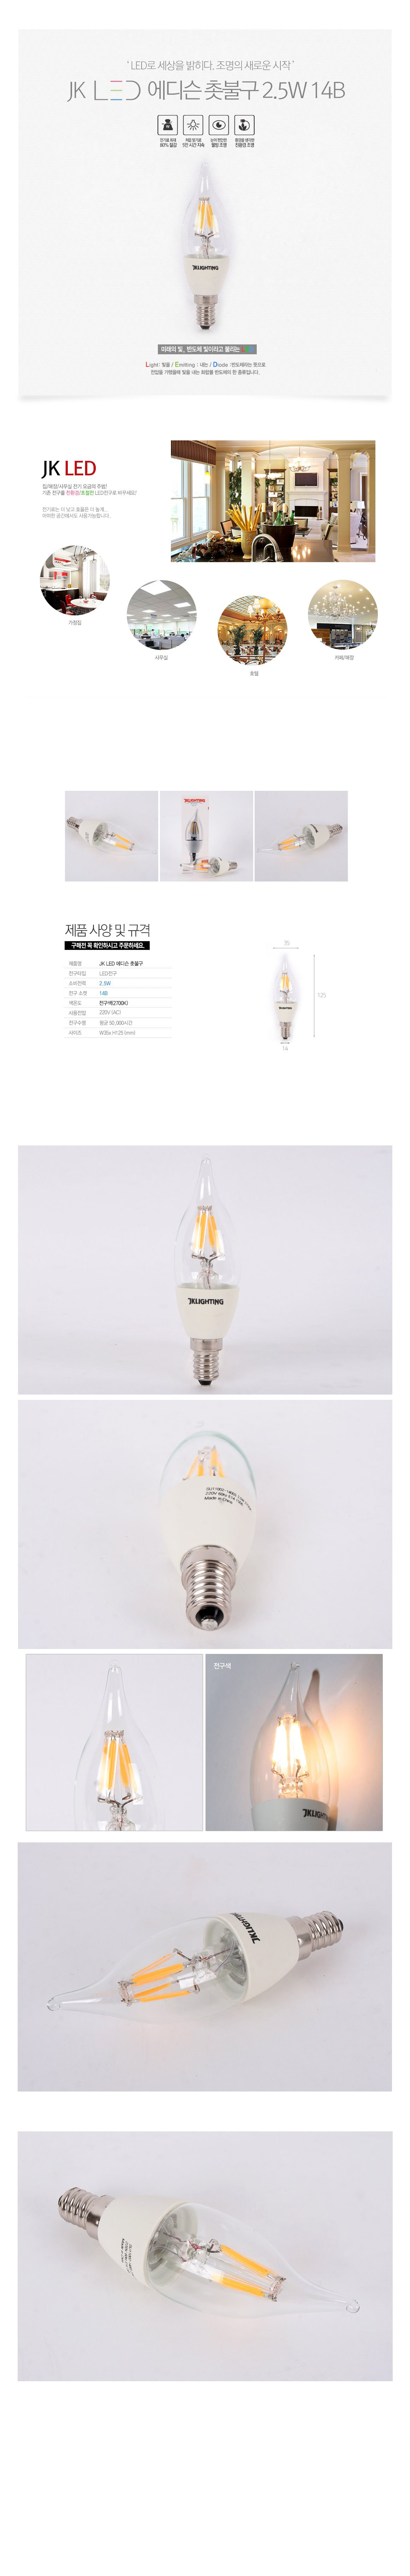 JK LED 에디슨 촛불구 2.5W 14B